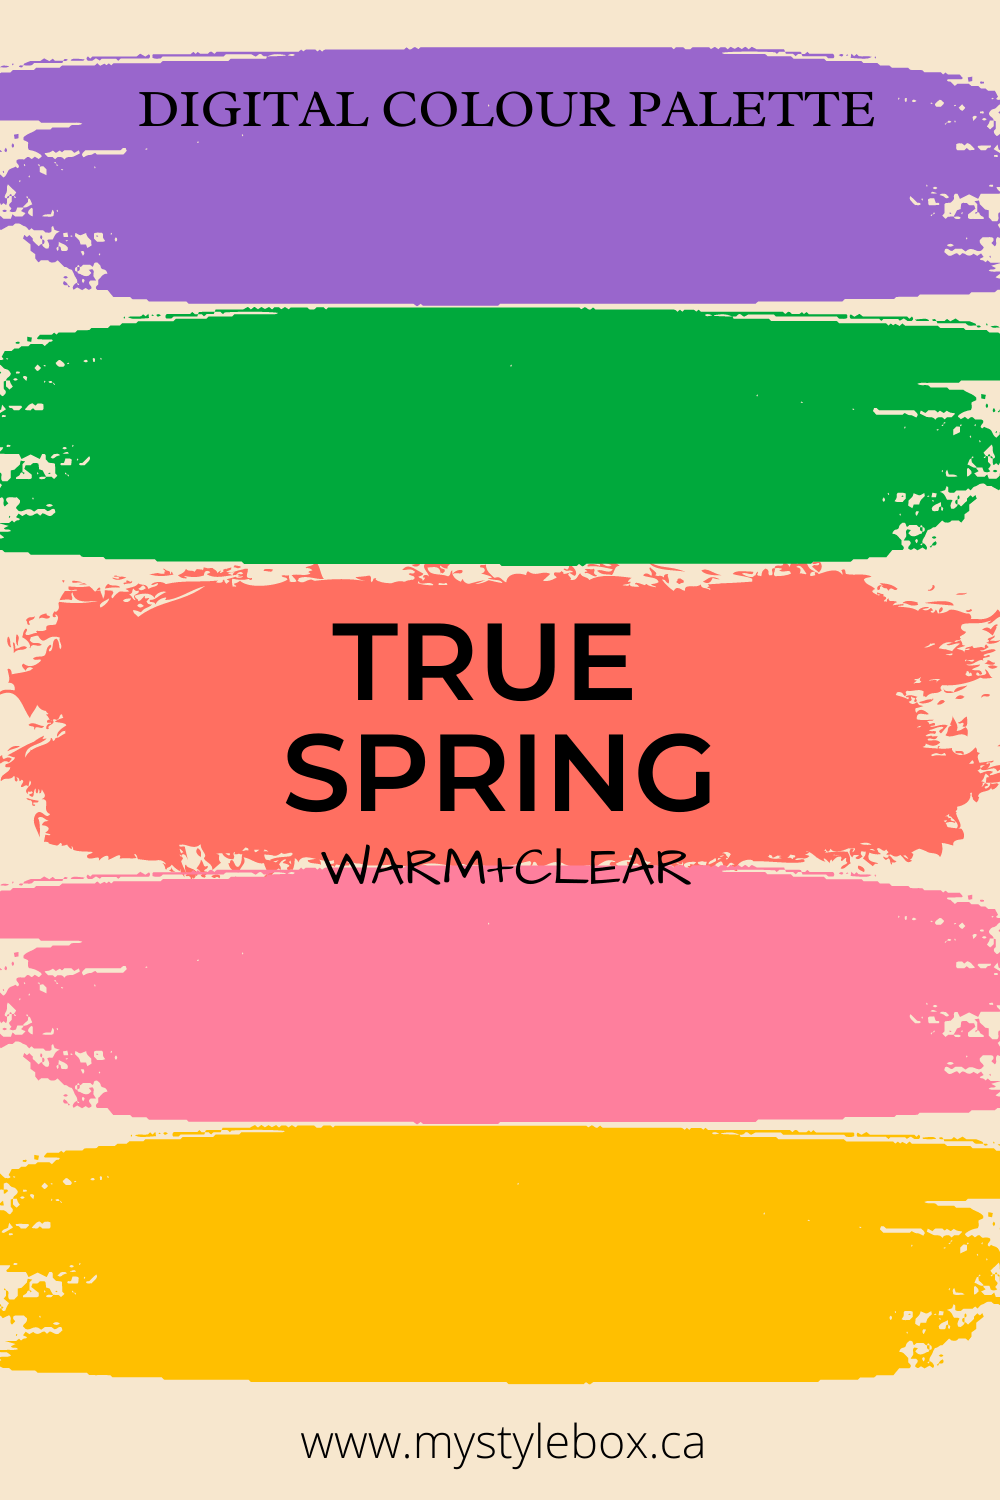 True Spring Season Digital Color Palette